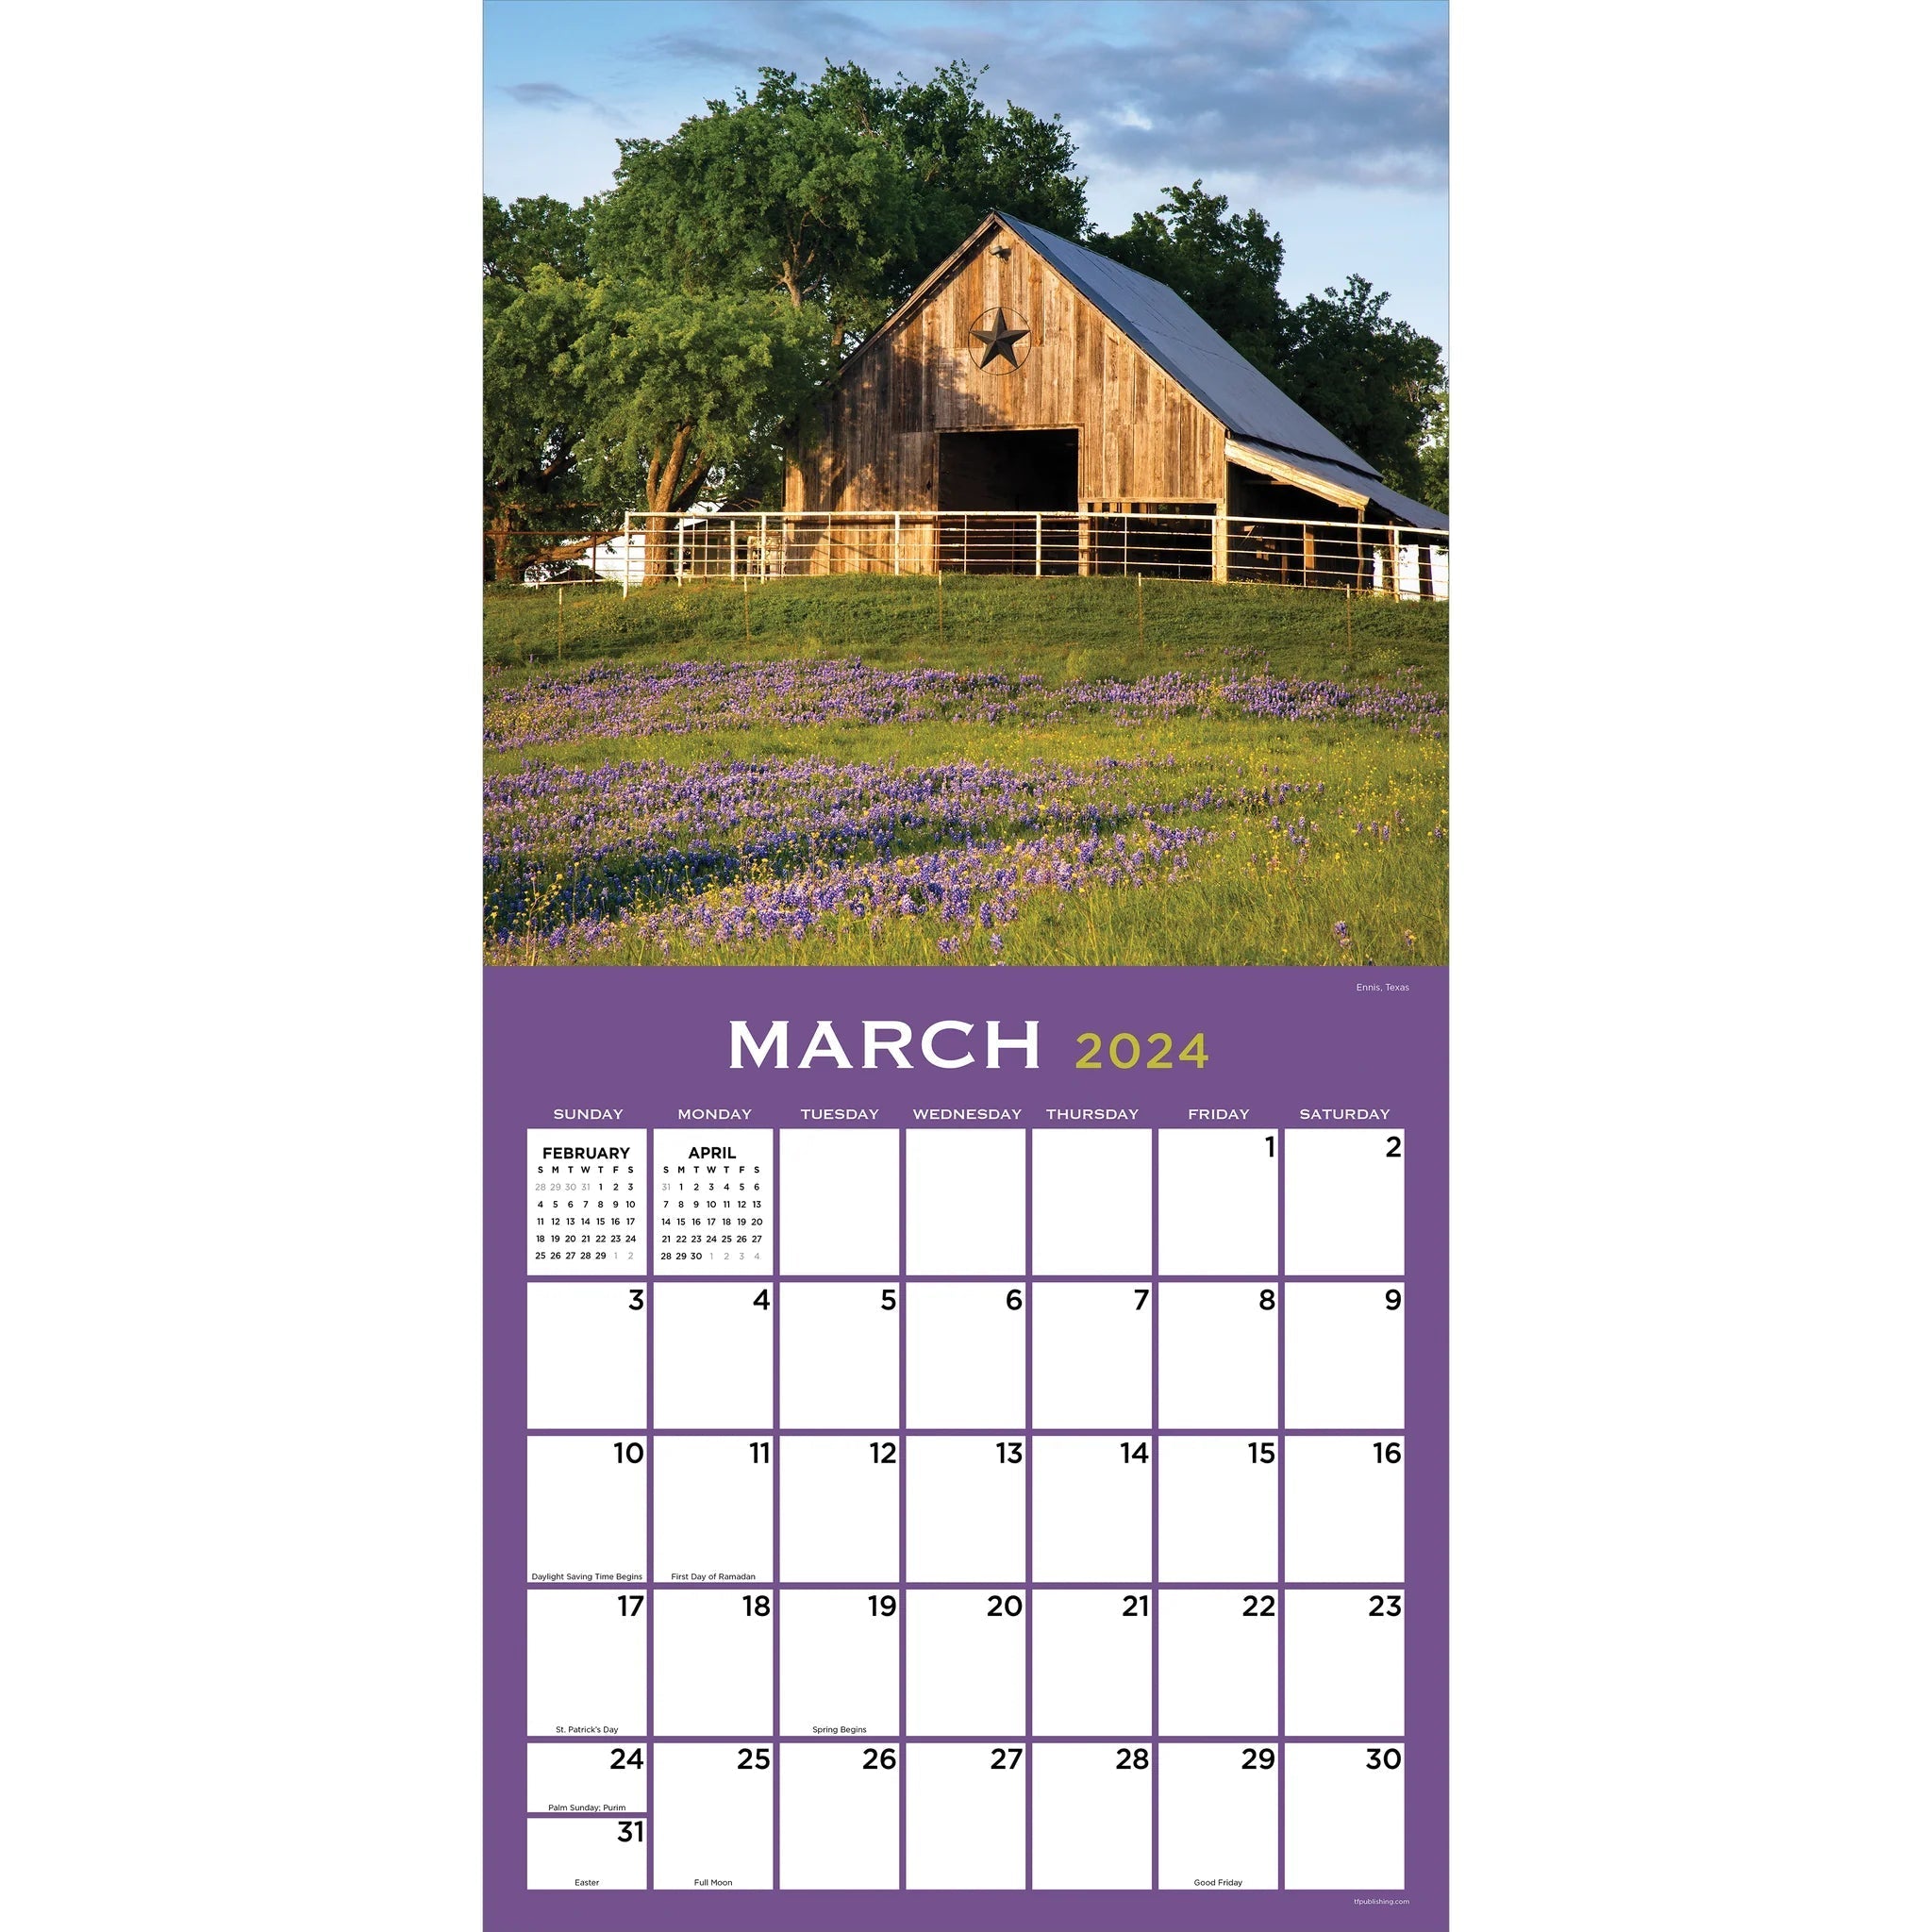 2024 Barns - Square Wall Calendar